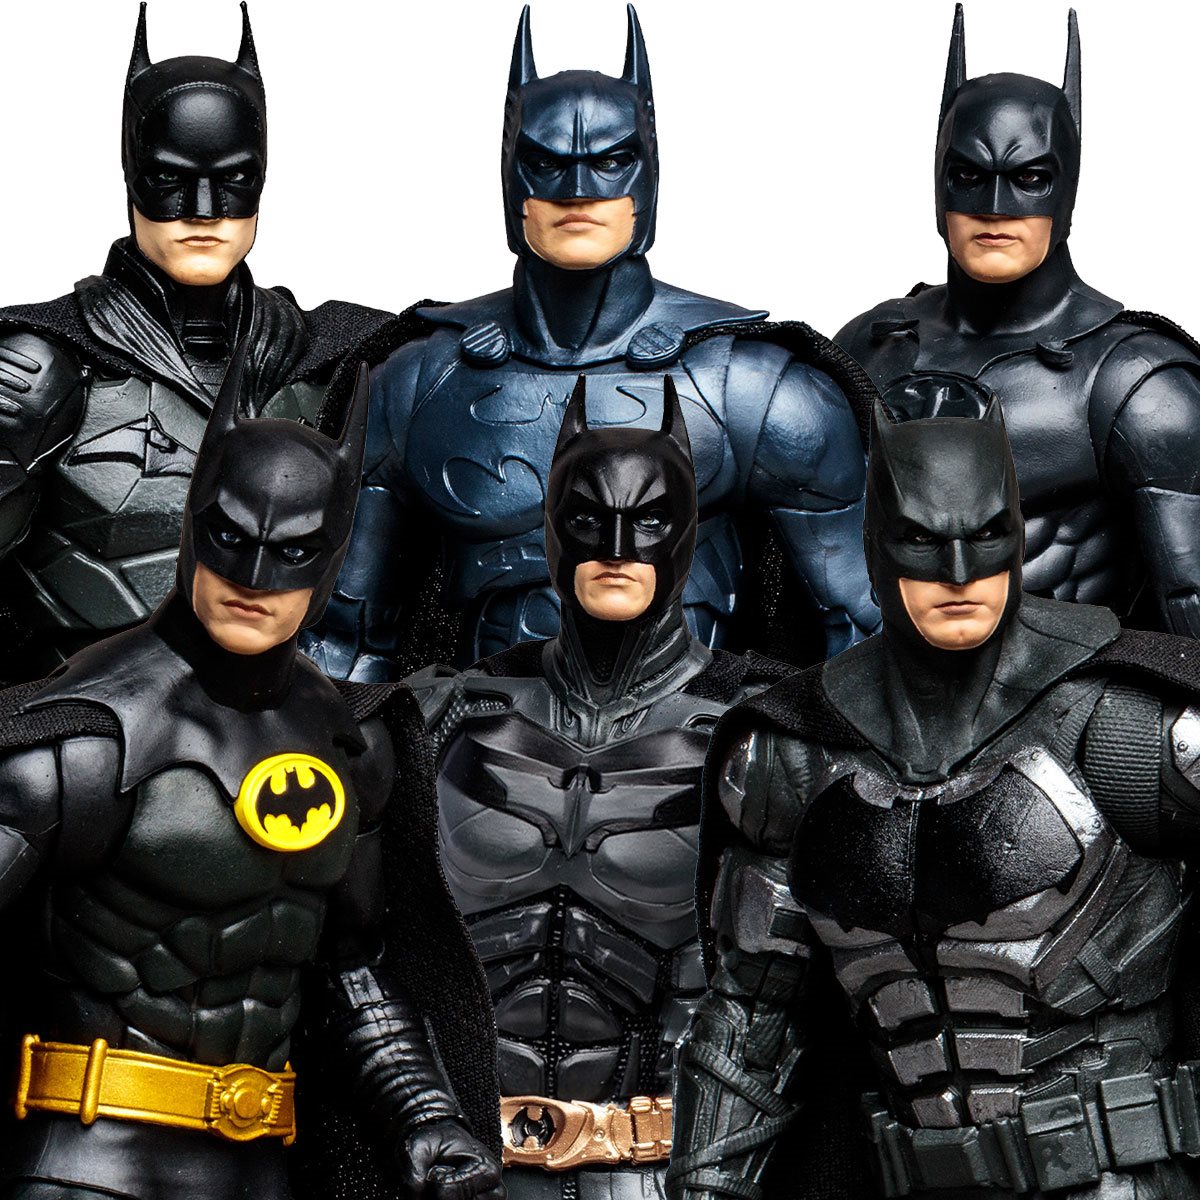 McFarlane Toys DC Multiverse: WB100 Batman The Ultimate Movie Collection - Batman Action Figure 6-Pack